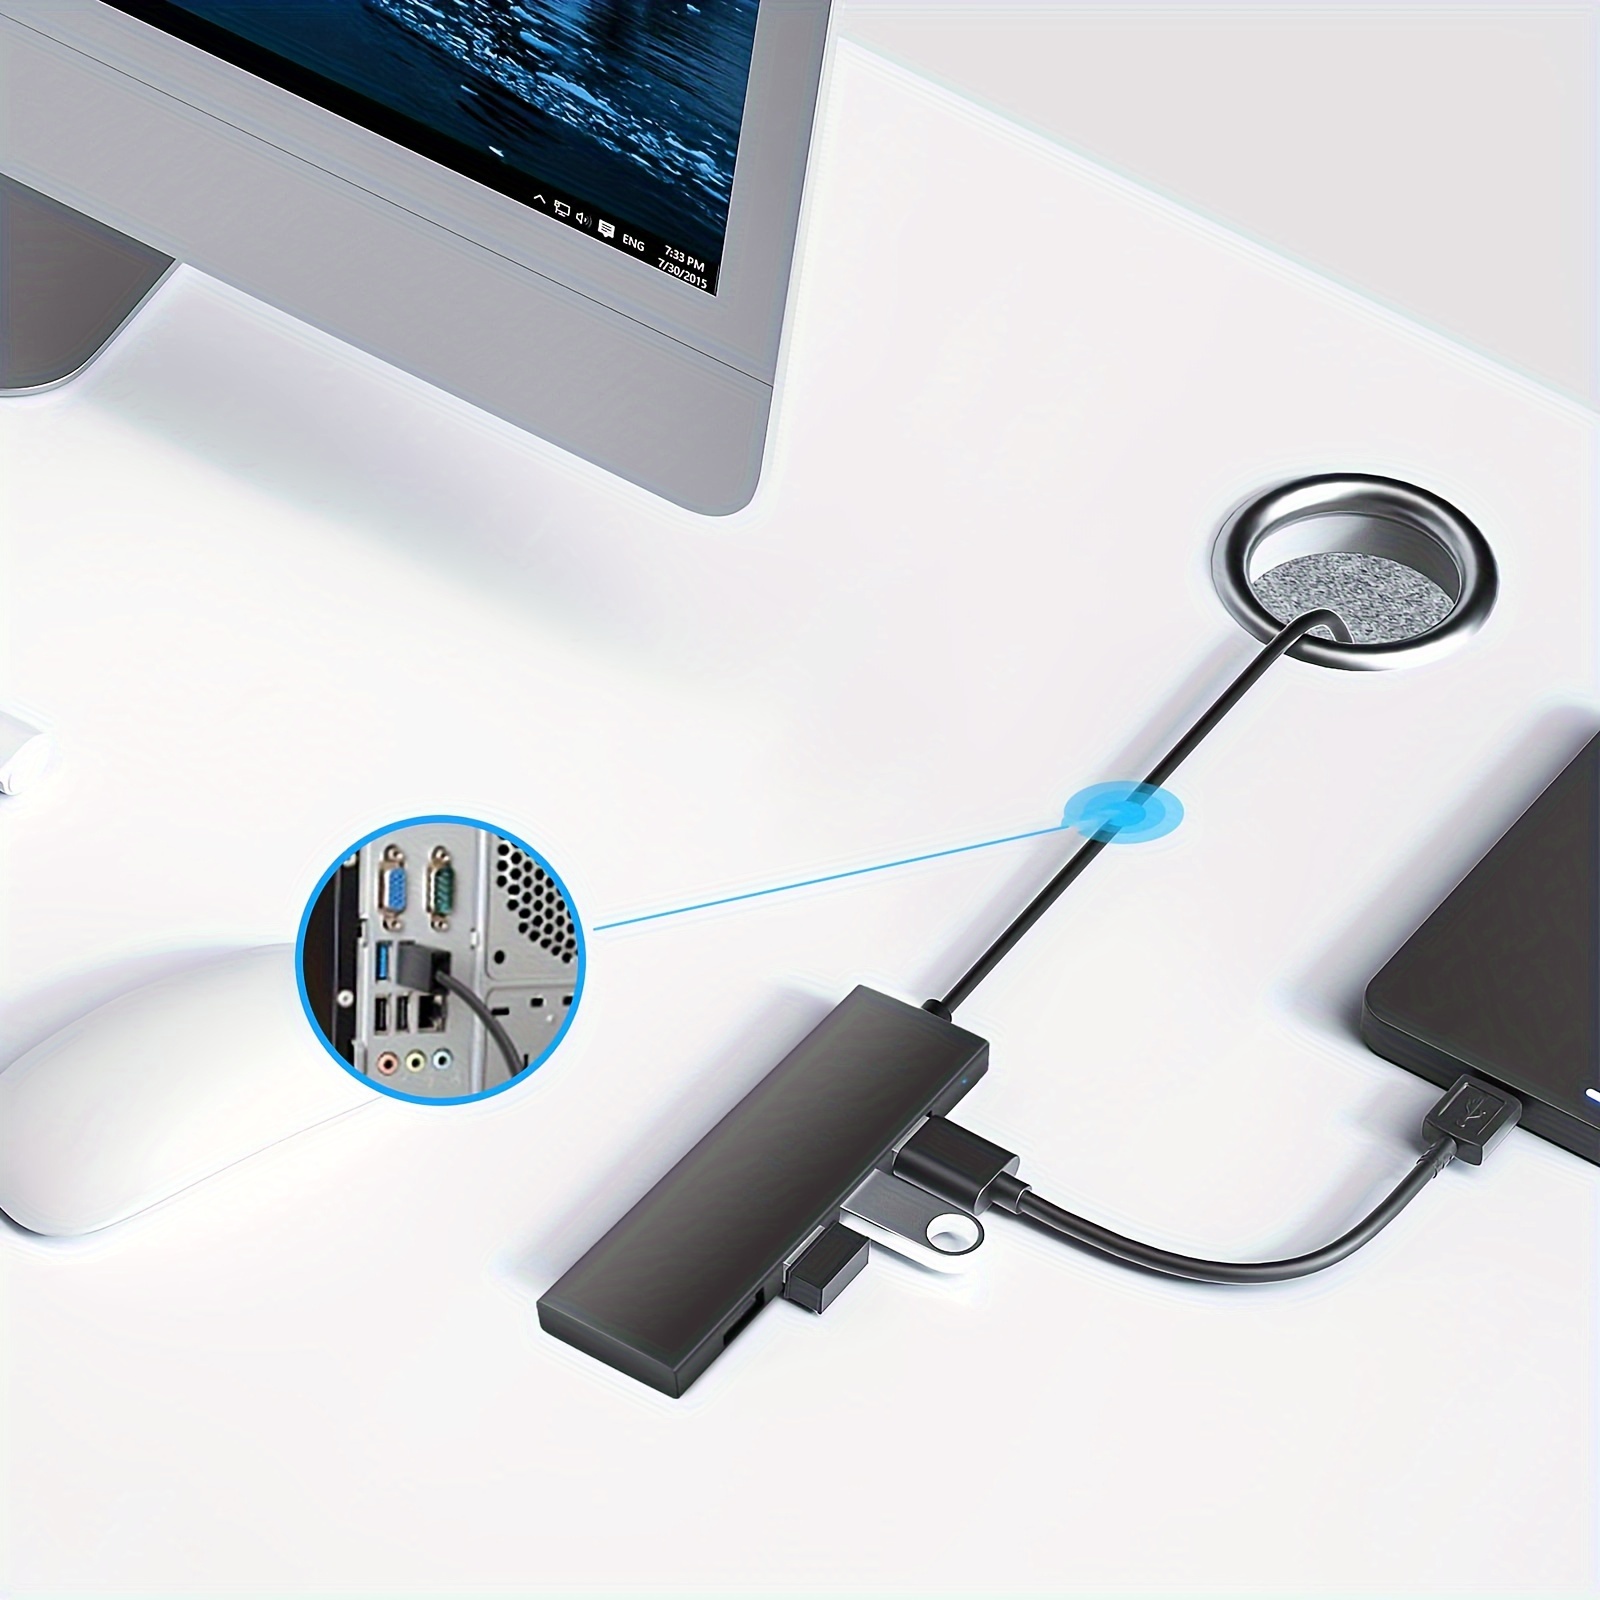 Concentrador USB 3.0, concentrador USB vienon de 4 puertos USB Splitter USB  expansor USB para laptop, Xbox, unidad flash, disco duro, consola